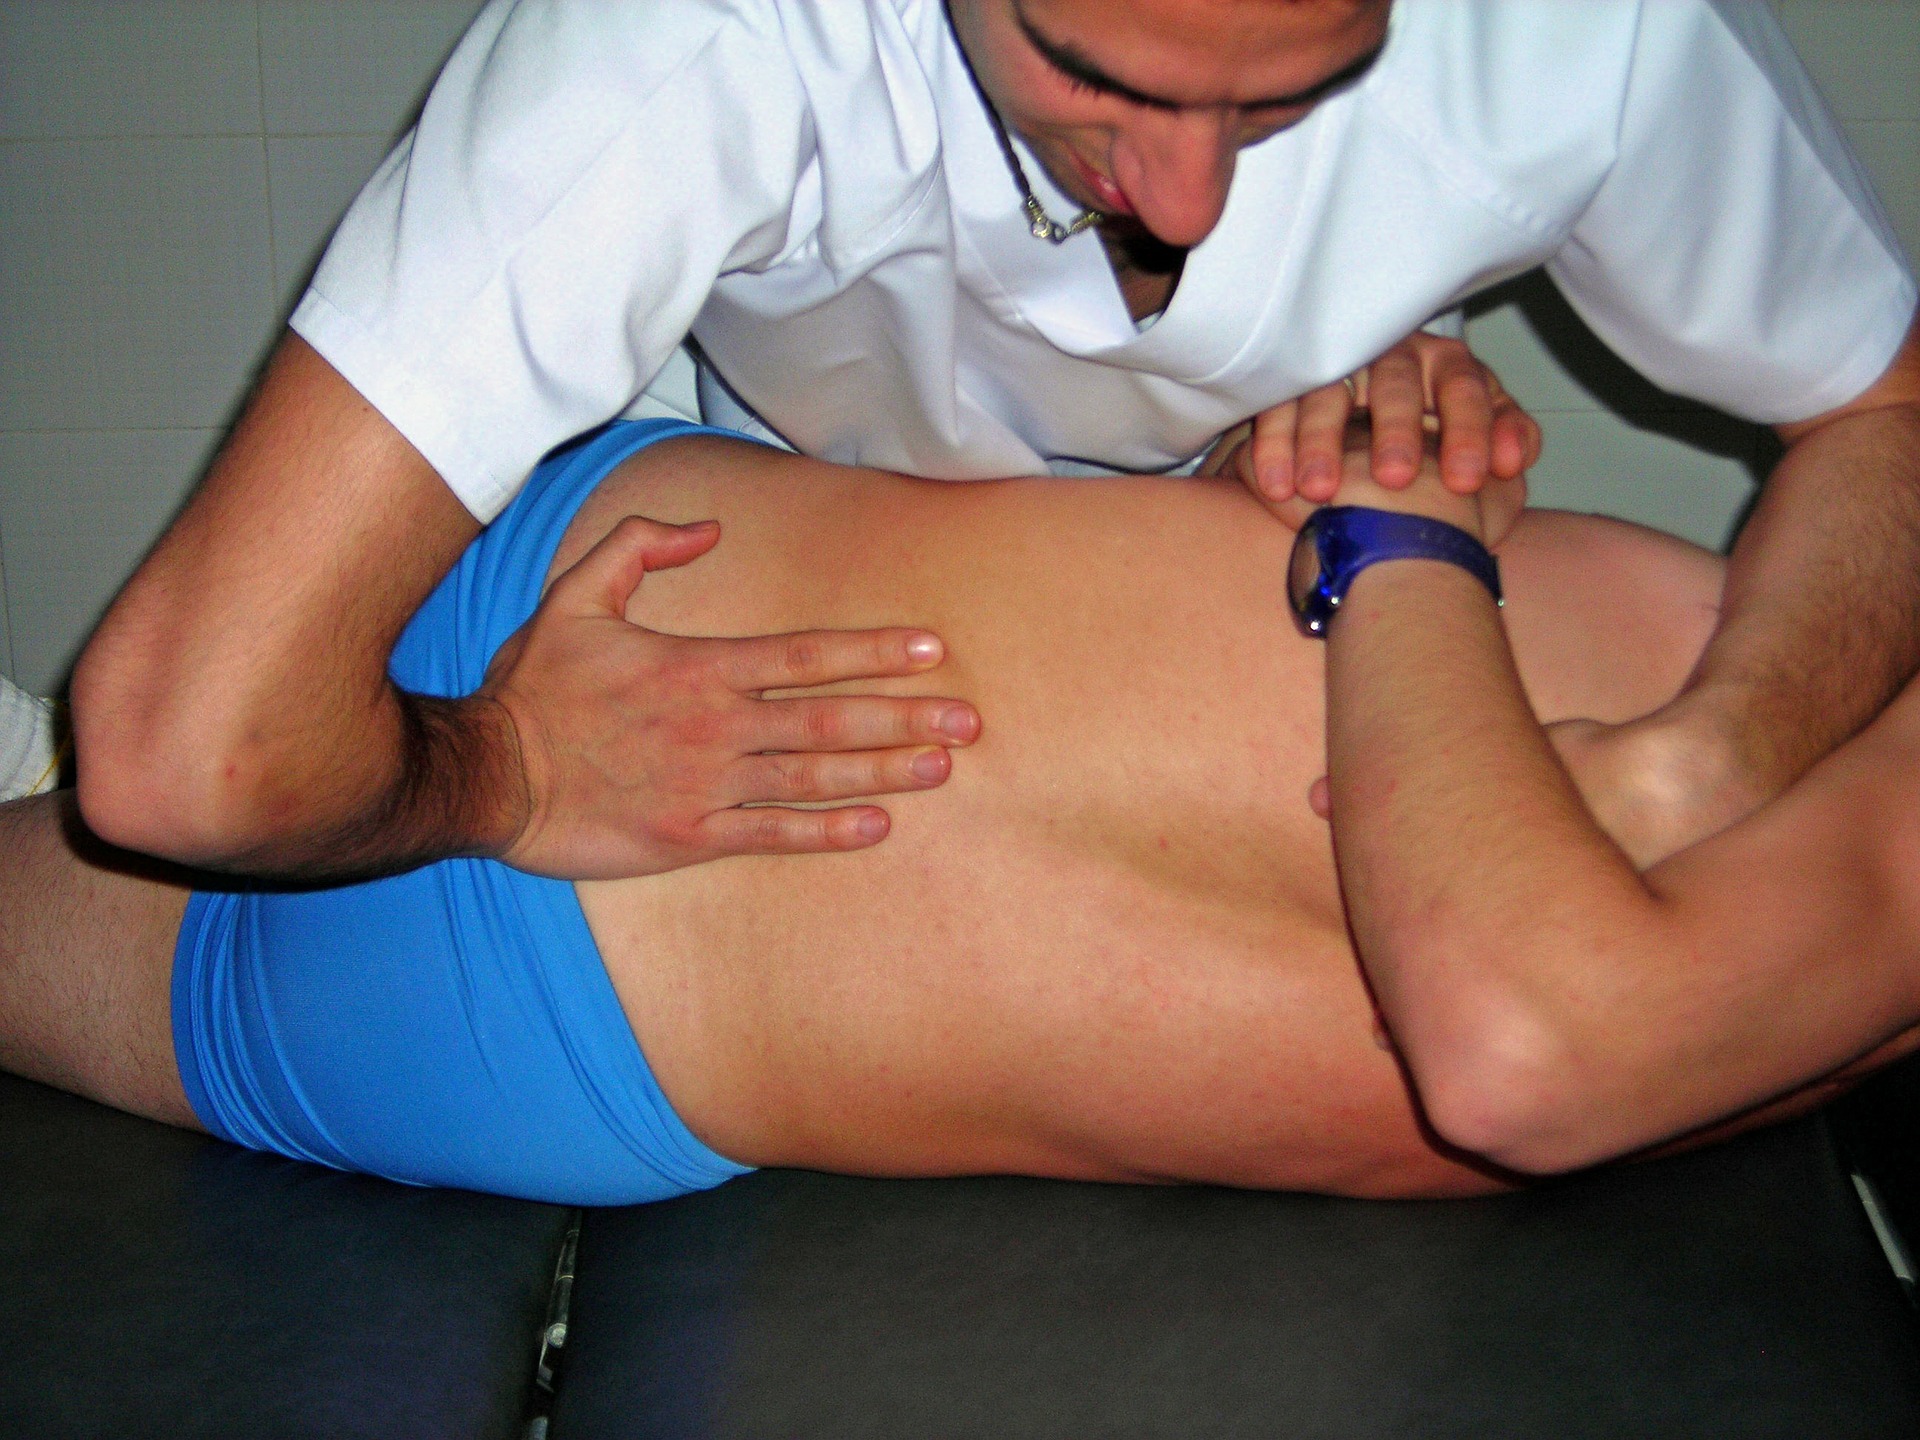 Lumbar sprain and osteopathy: Effective?